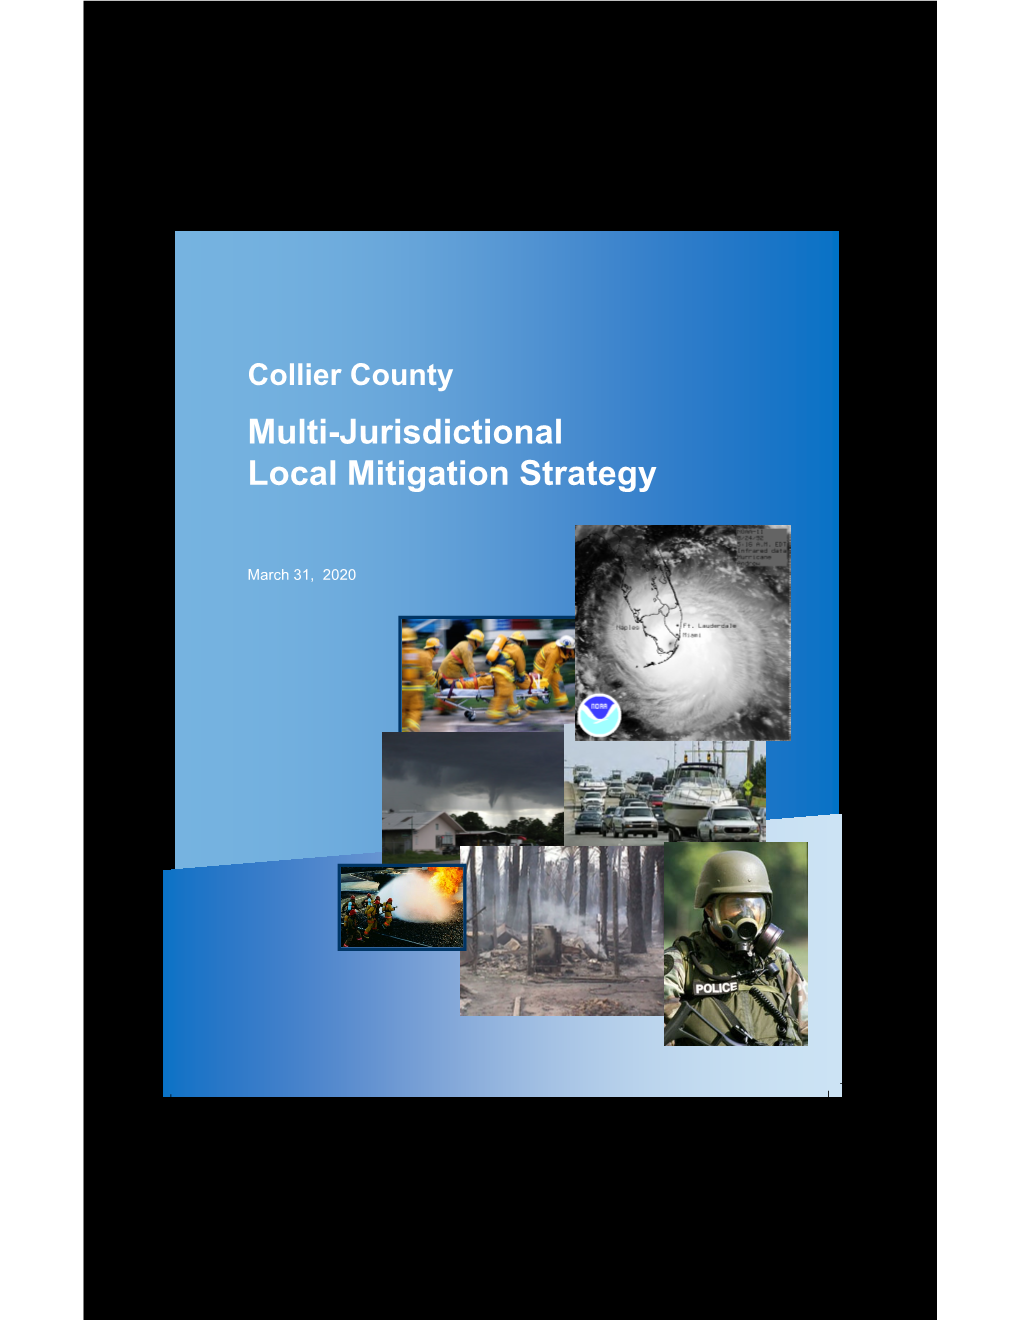 Collier County Multi-Jurisdictional Local Mitigation Strategy